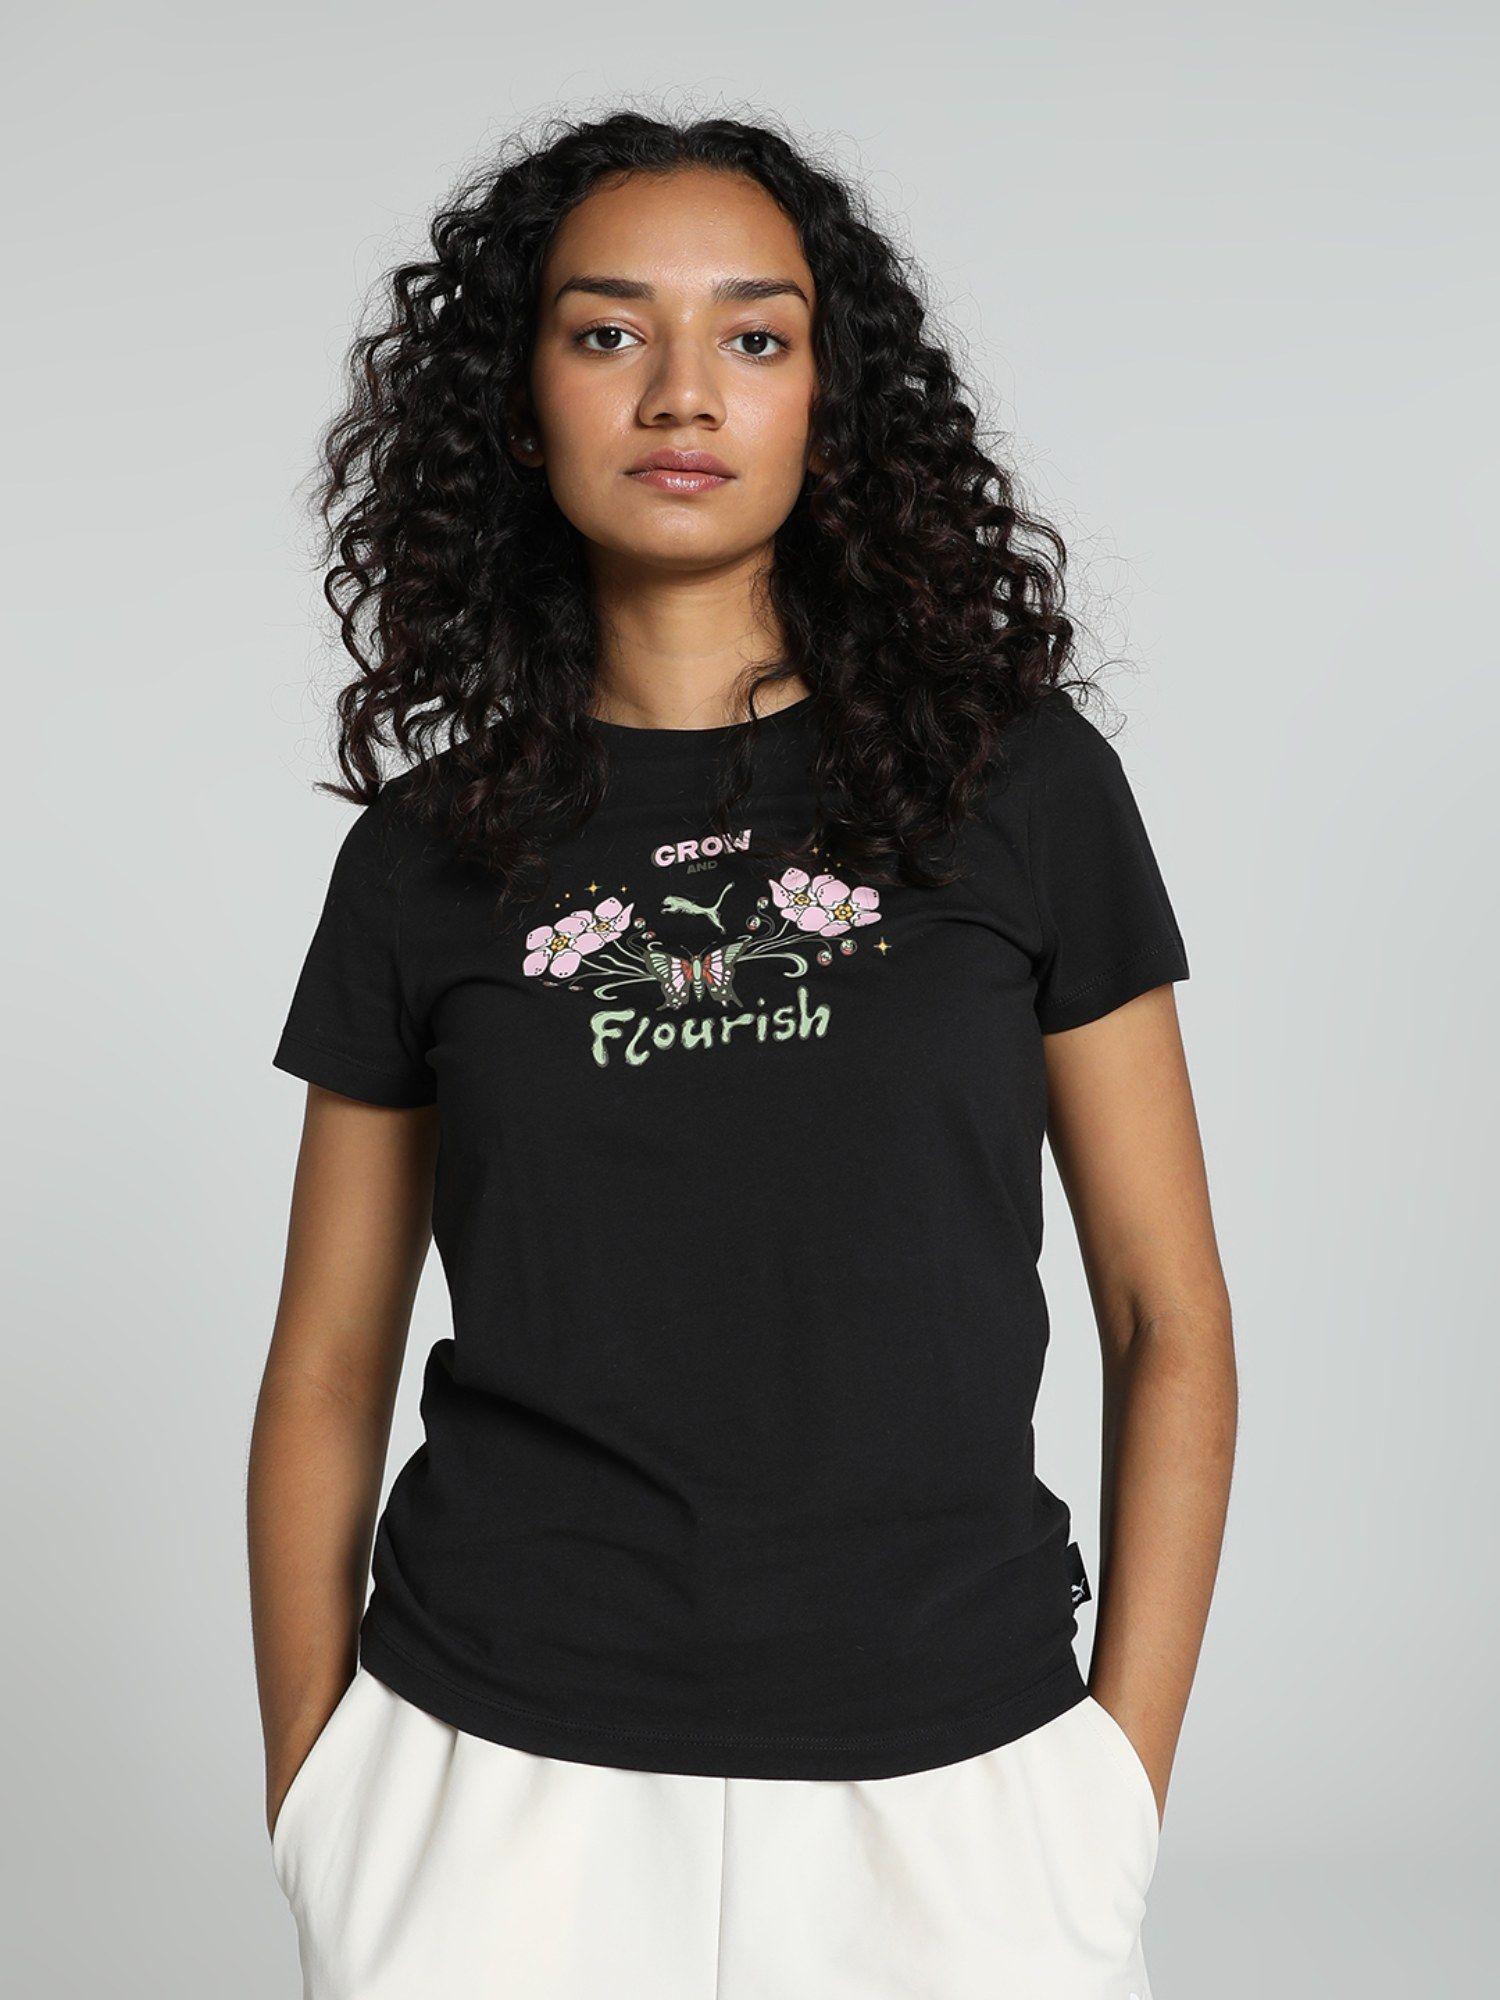 graphics grow & flourish womens black t-shirt